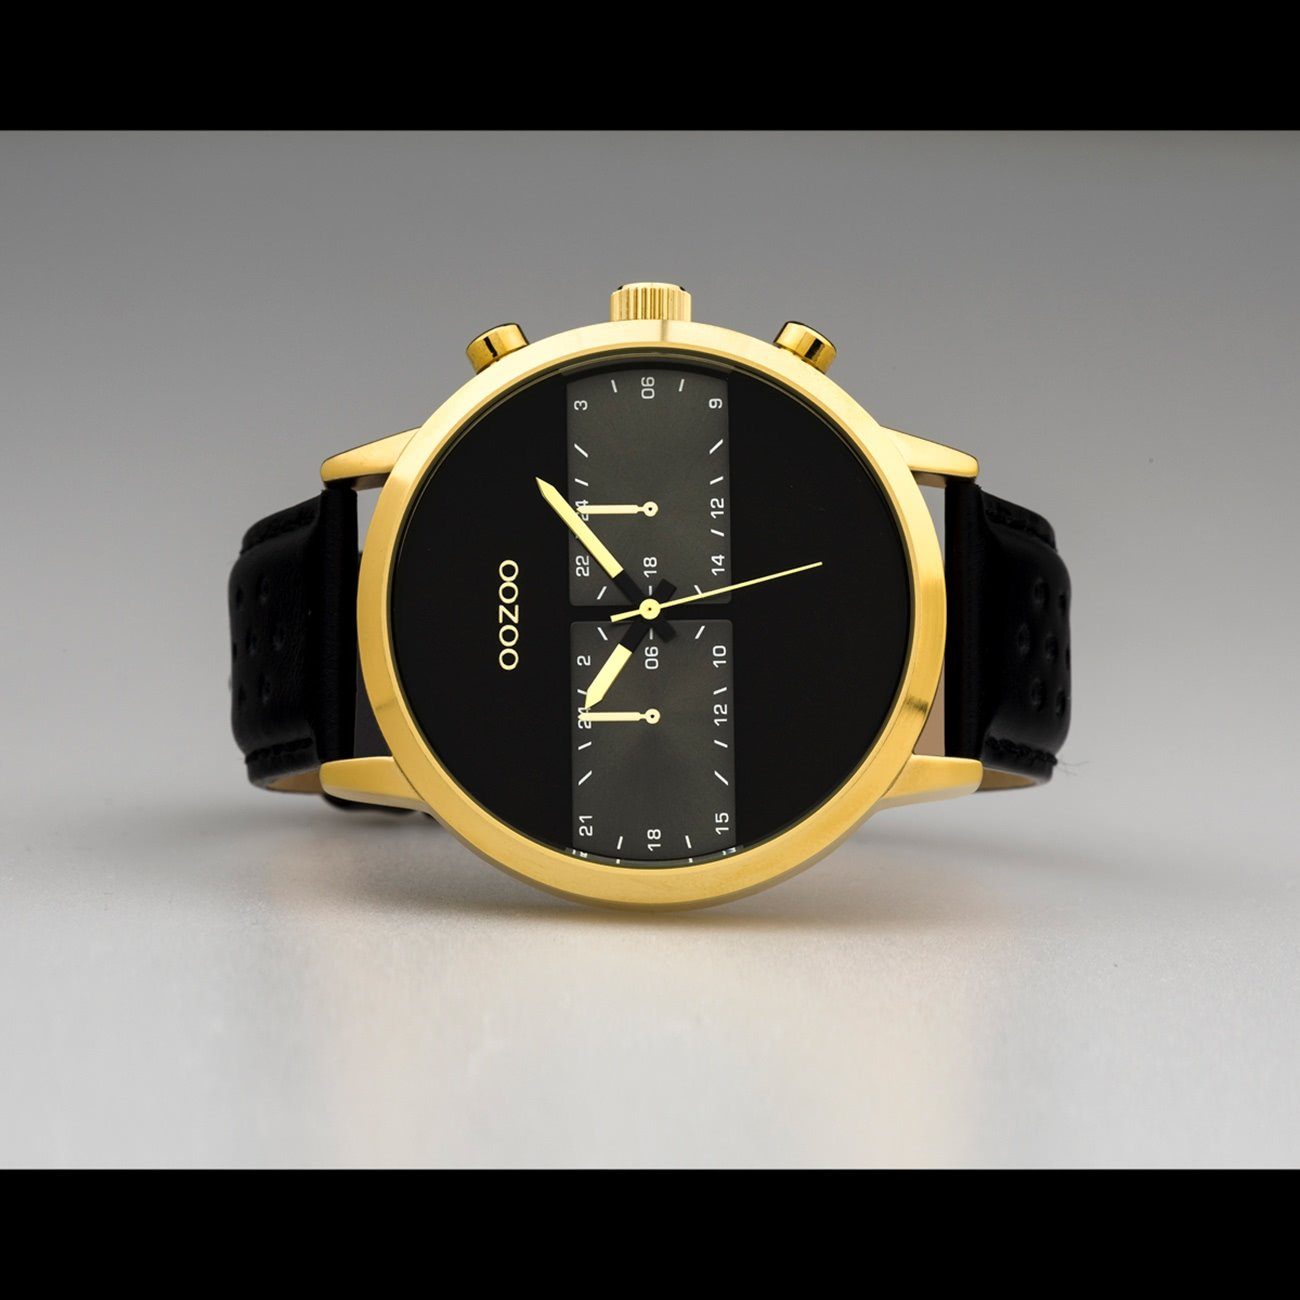 OOZOO Quarzuhr Oozoo Herren Armbanduhr groß Fashion-Style rund, Lederarmband, extra Herrenuhr schwarz (ca. Analog, 50mm)